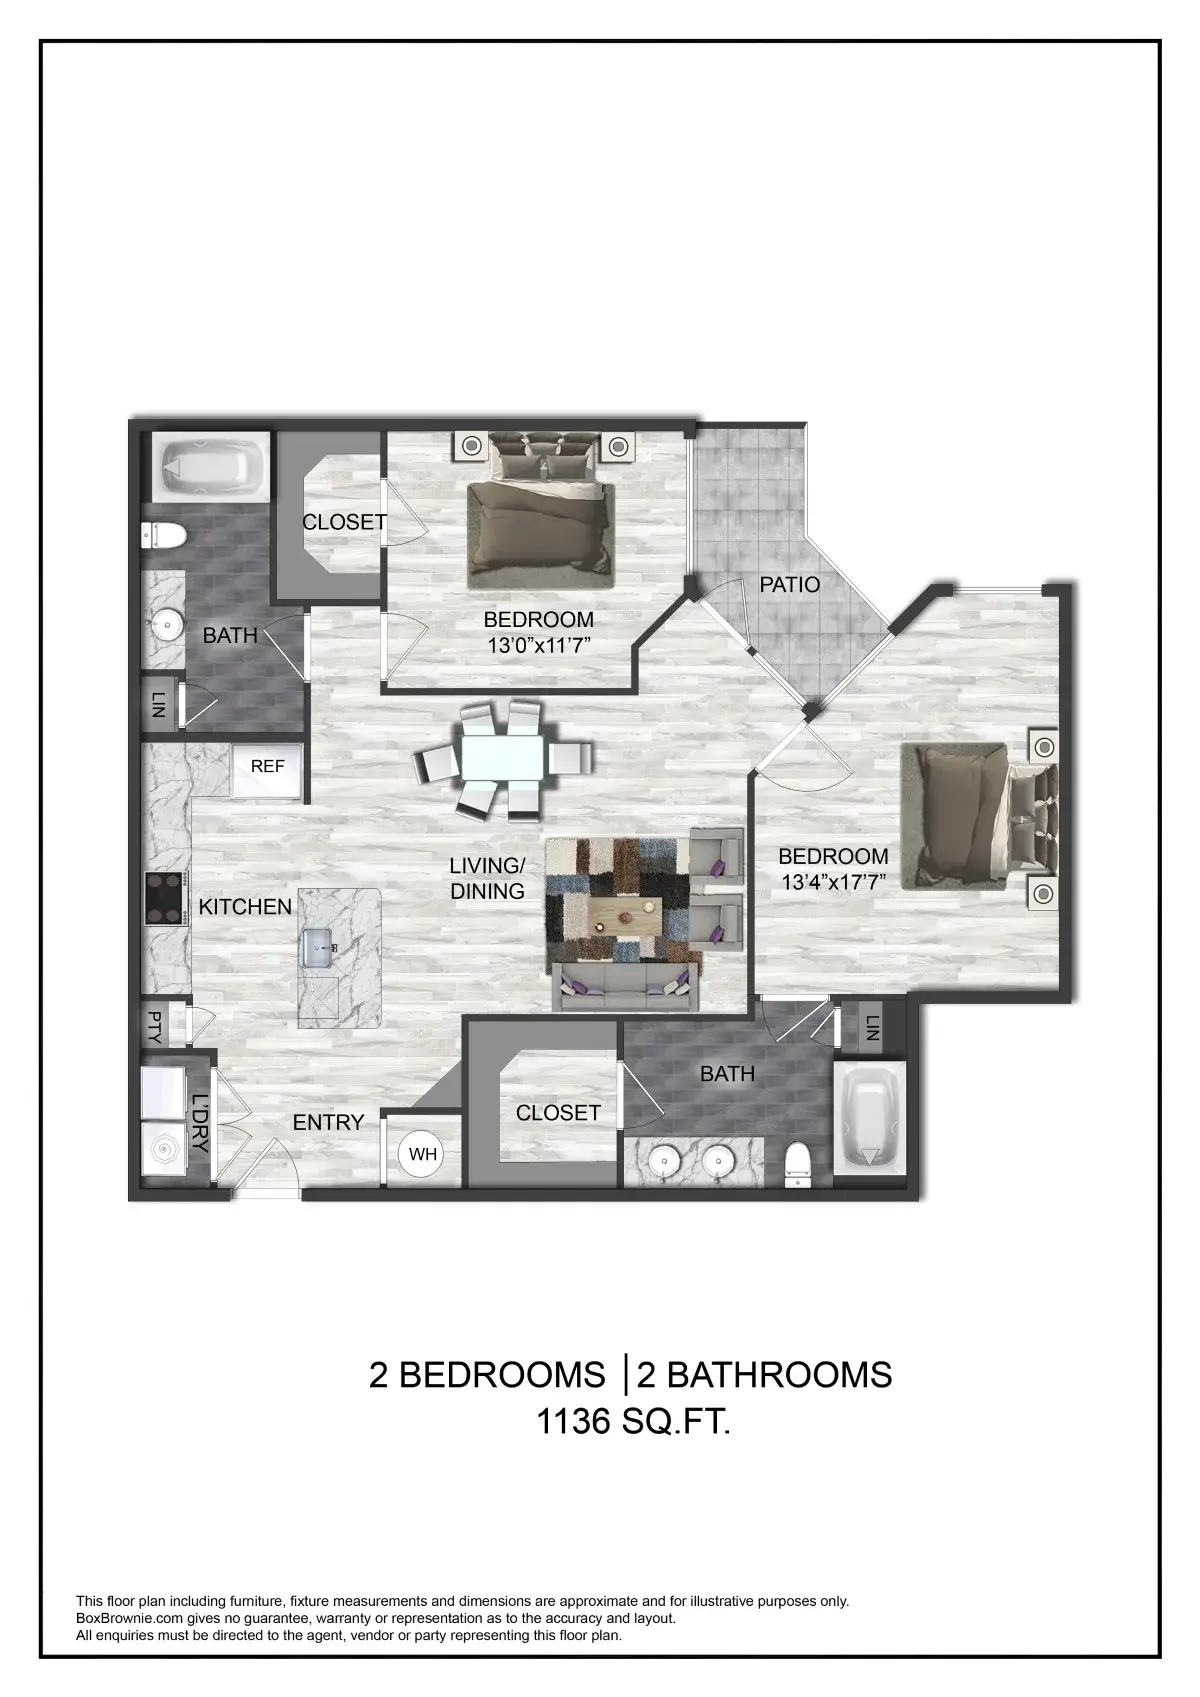 Sinclair houston apartment floorplan 7